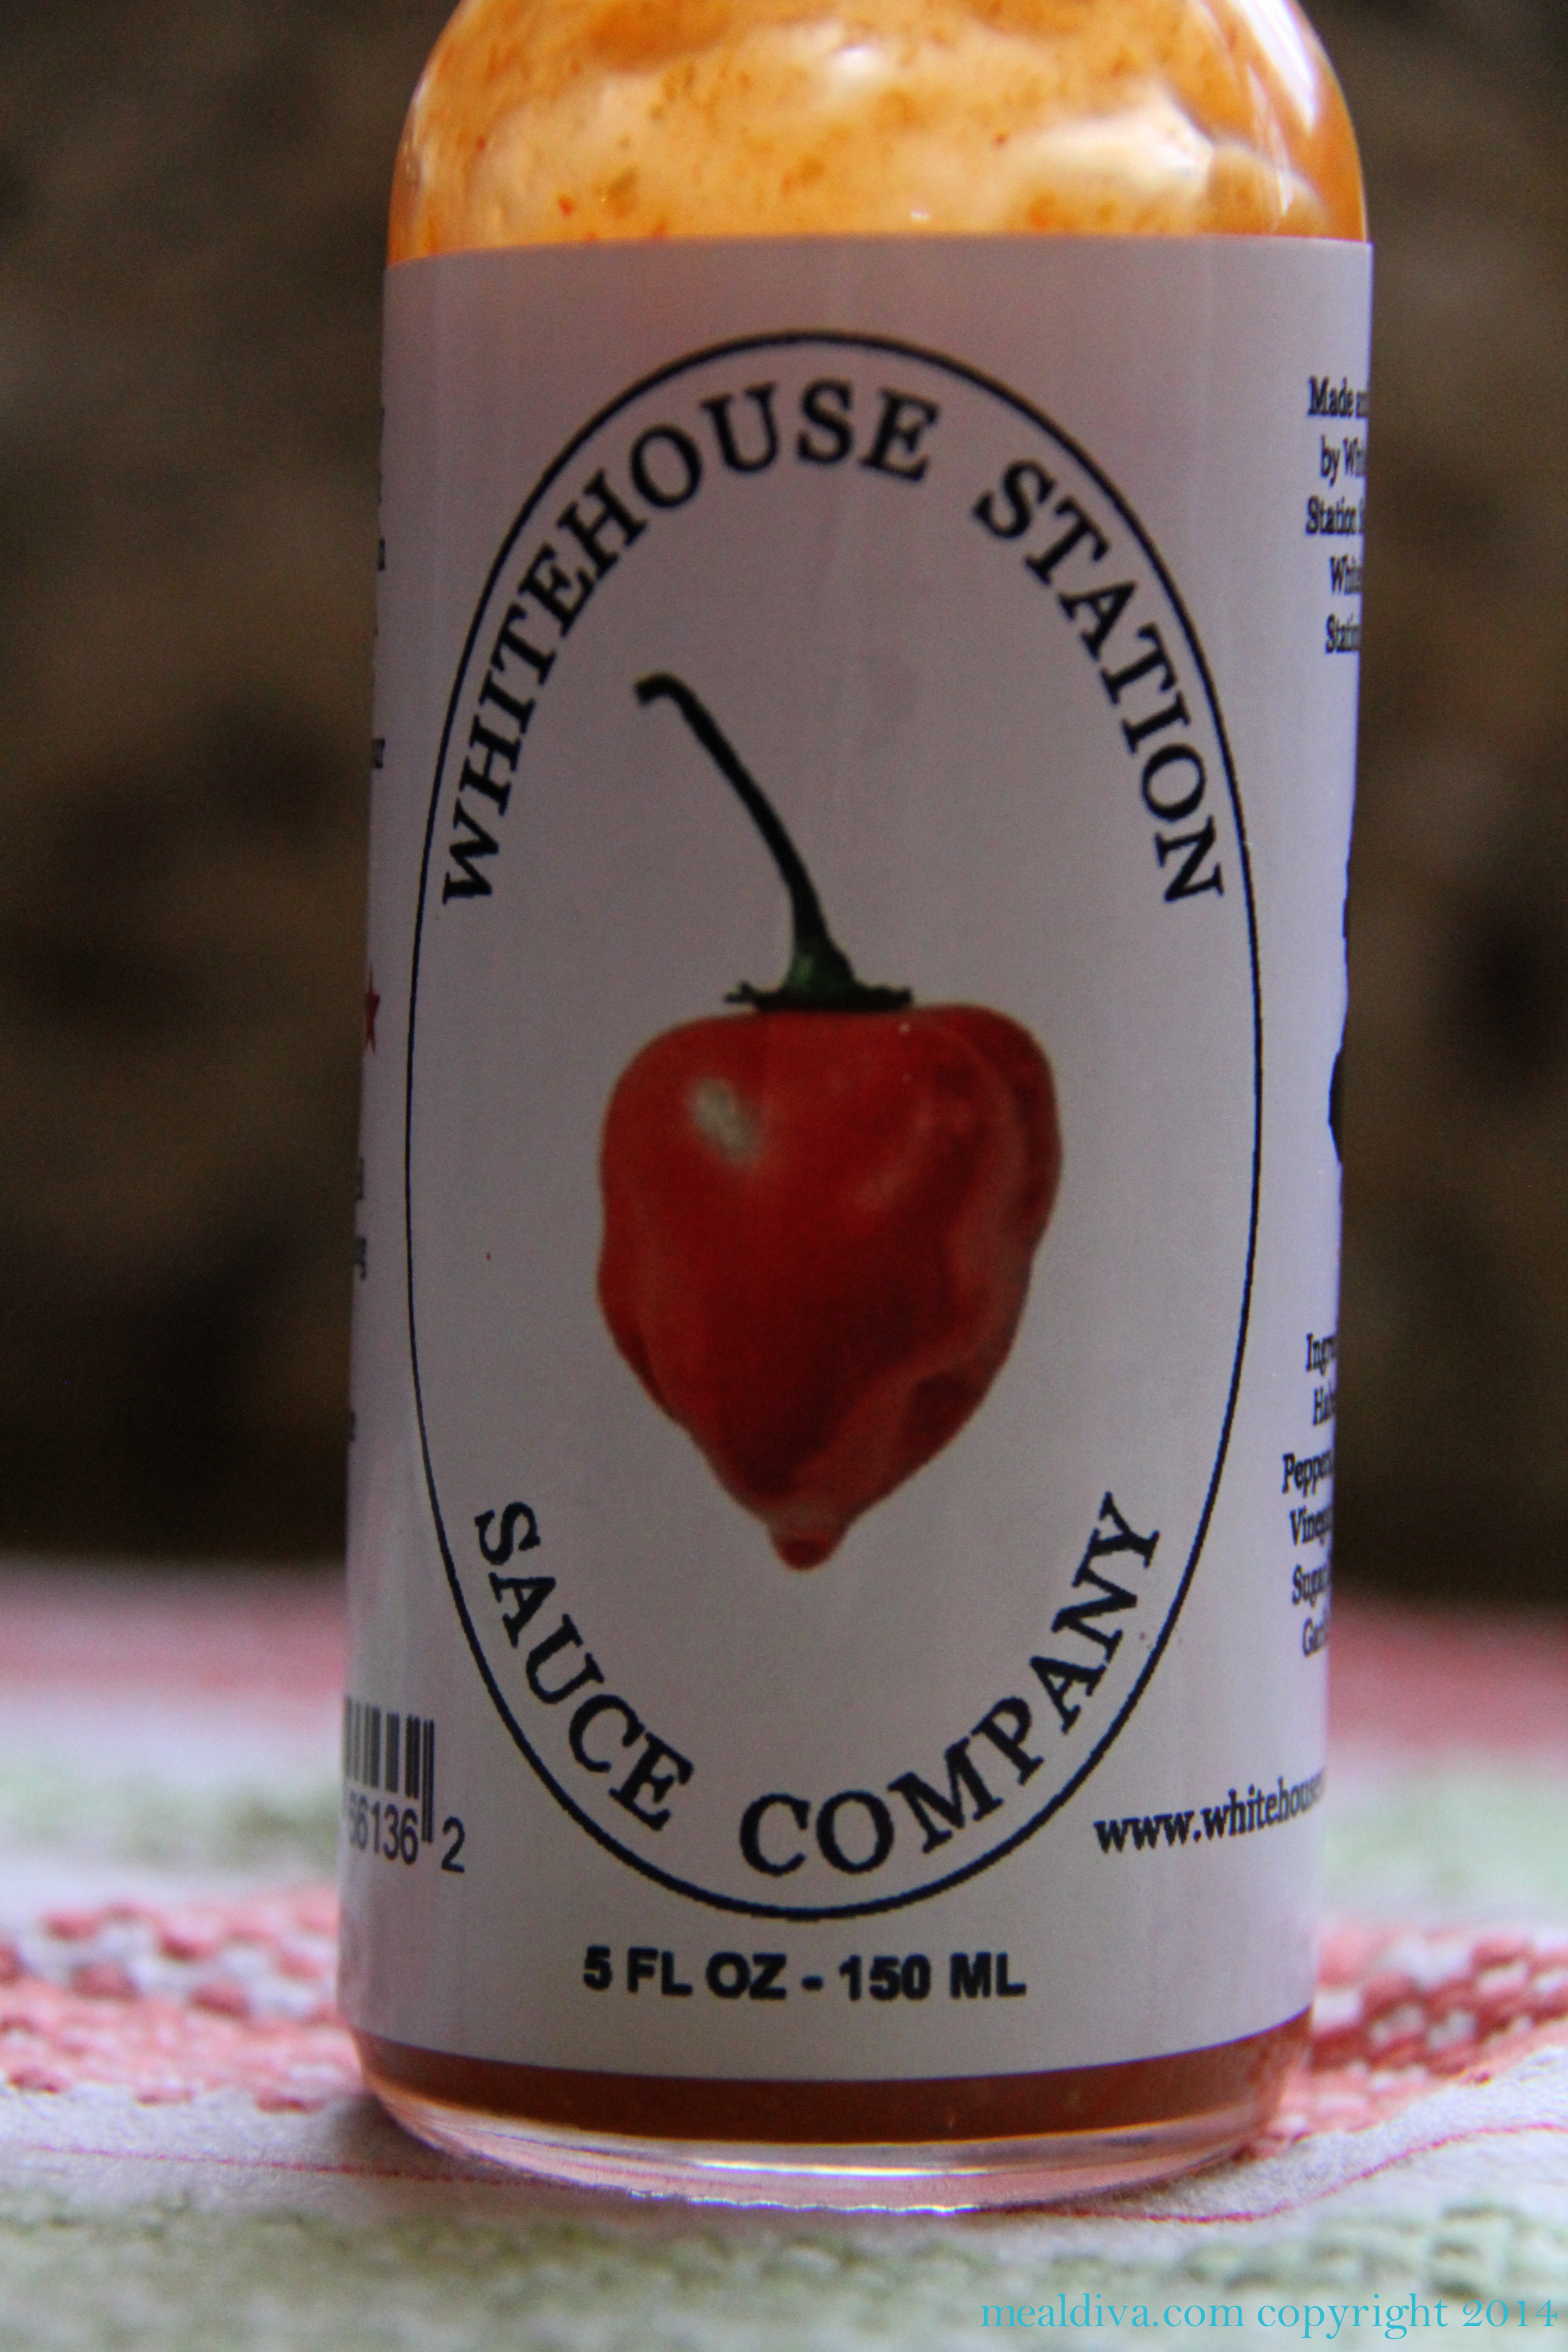 Whitehouse Station Hot Sauce Company